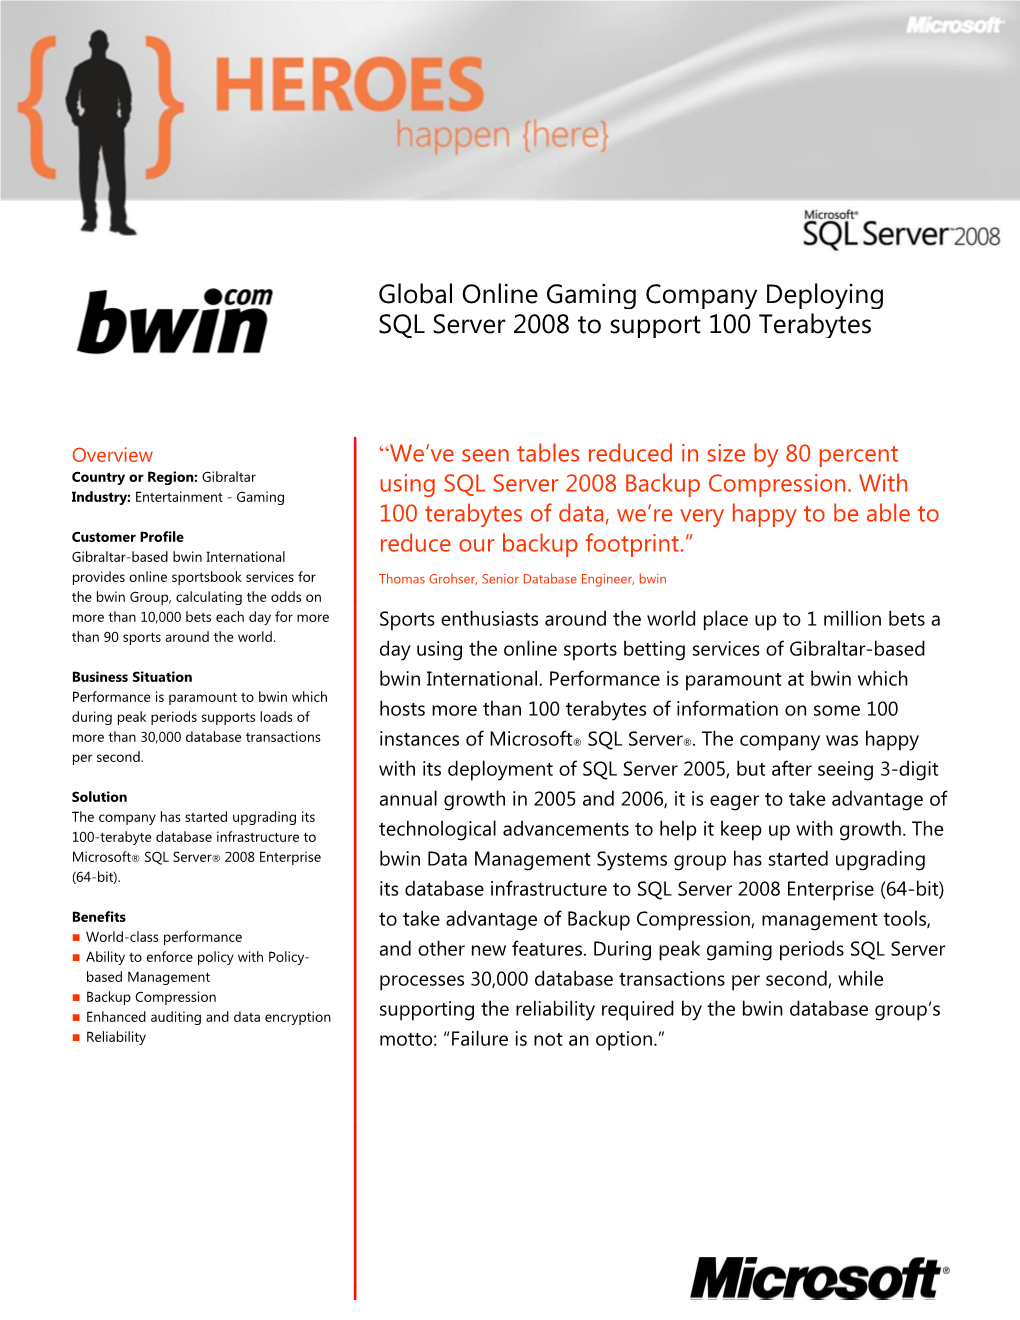 Bwin - SQL Server 2008 Case Study